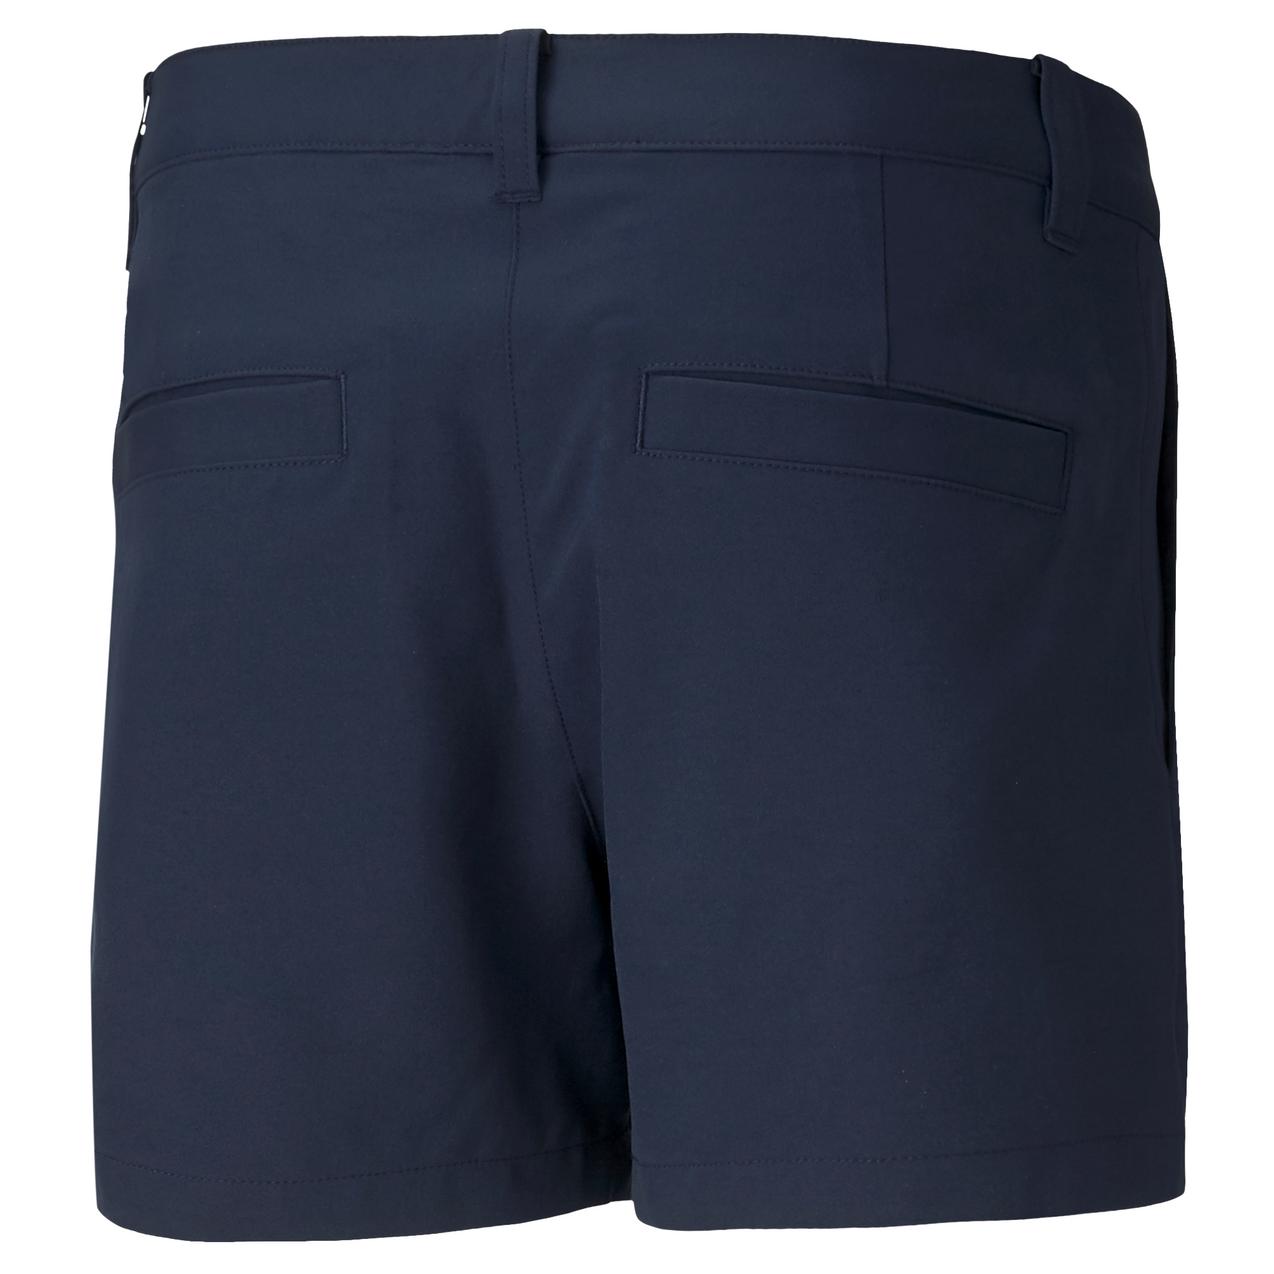 Girls puma golf shorts in a navy colour.